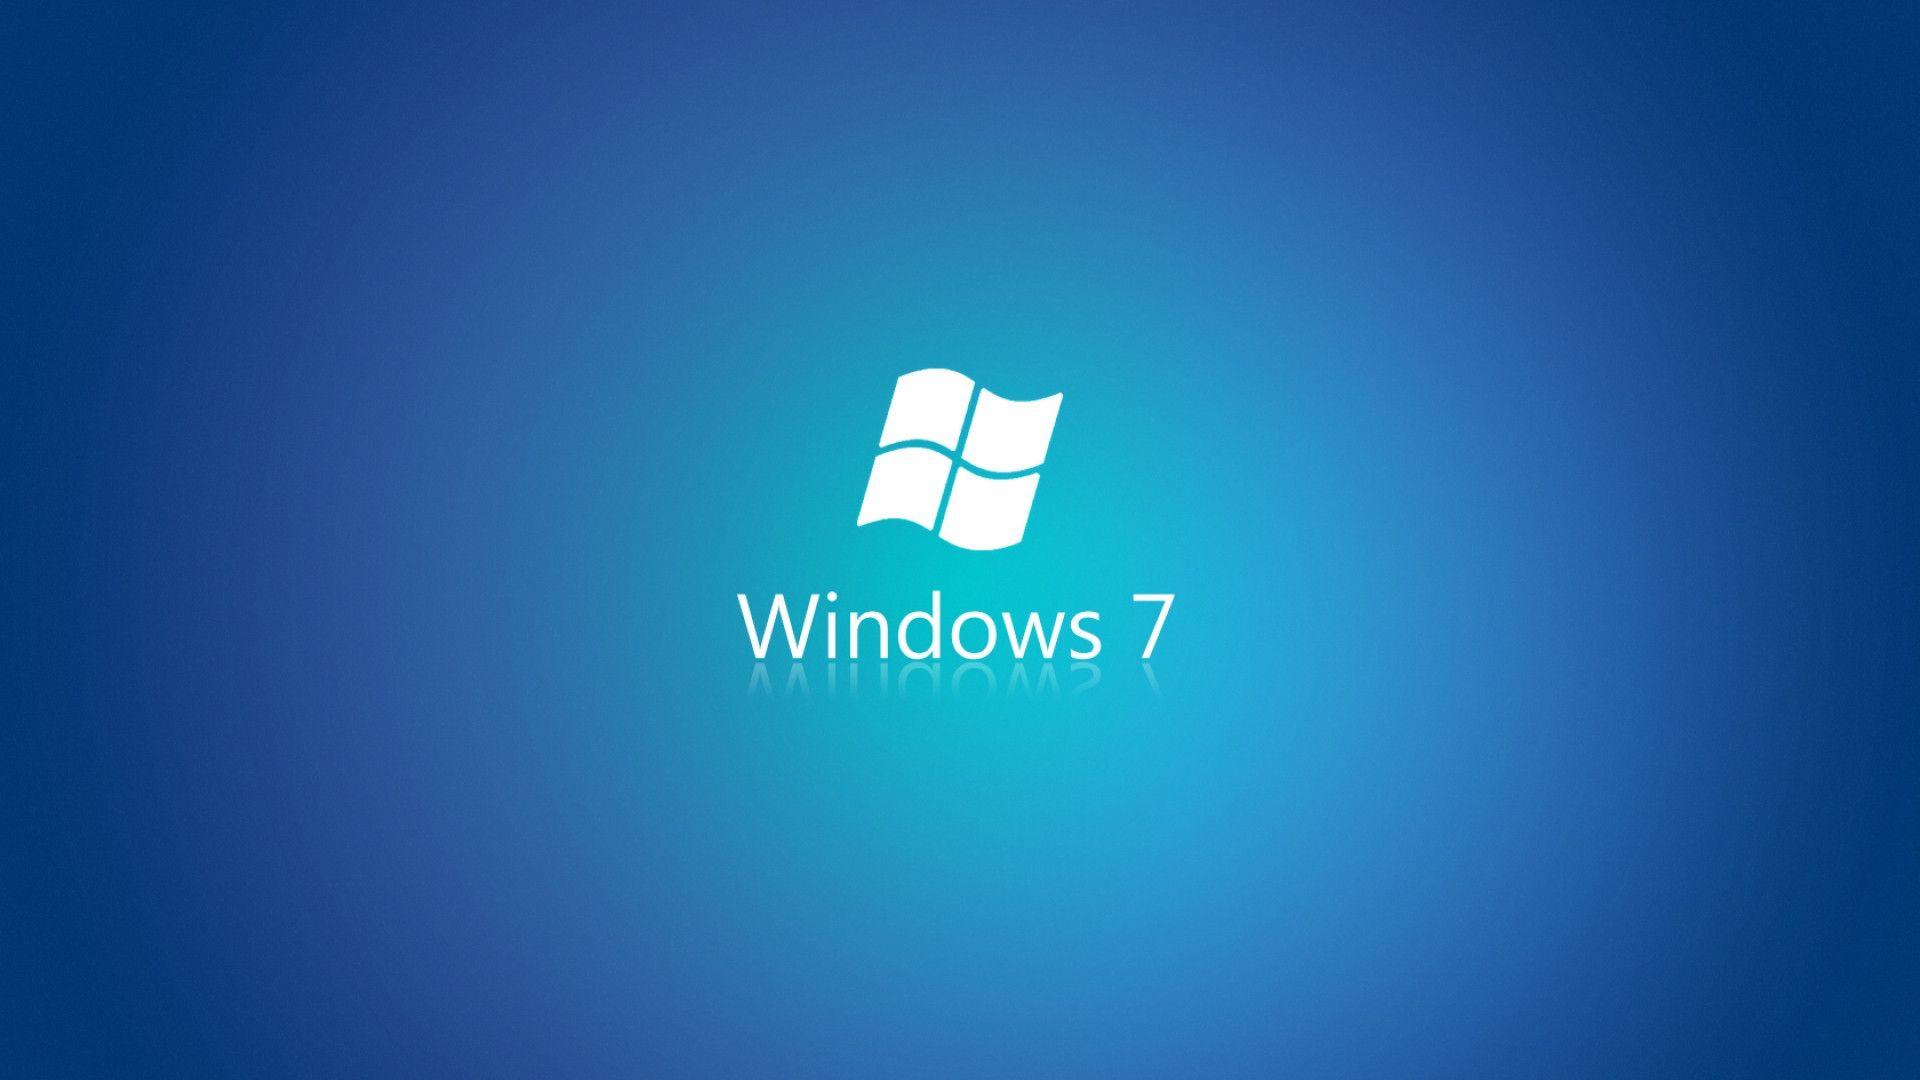 Download Windows Logo Wallpaper 1920x1080. HD Wallpaper